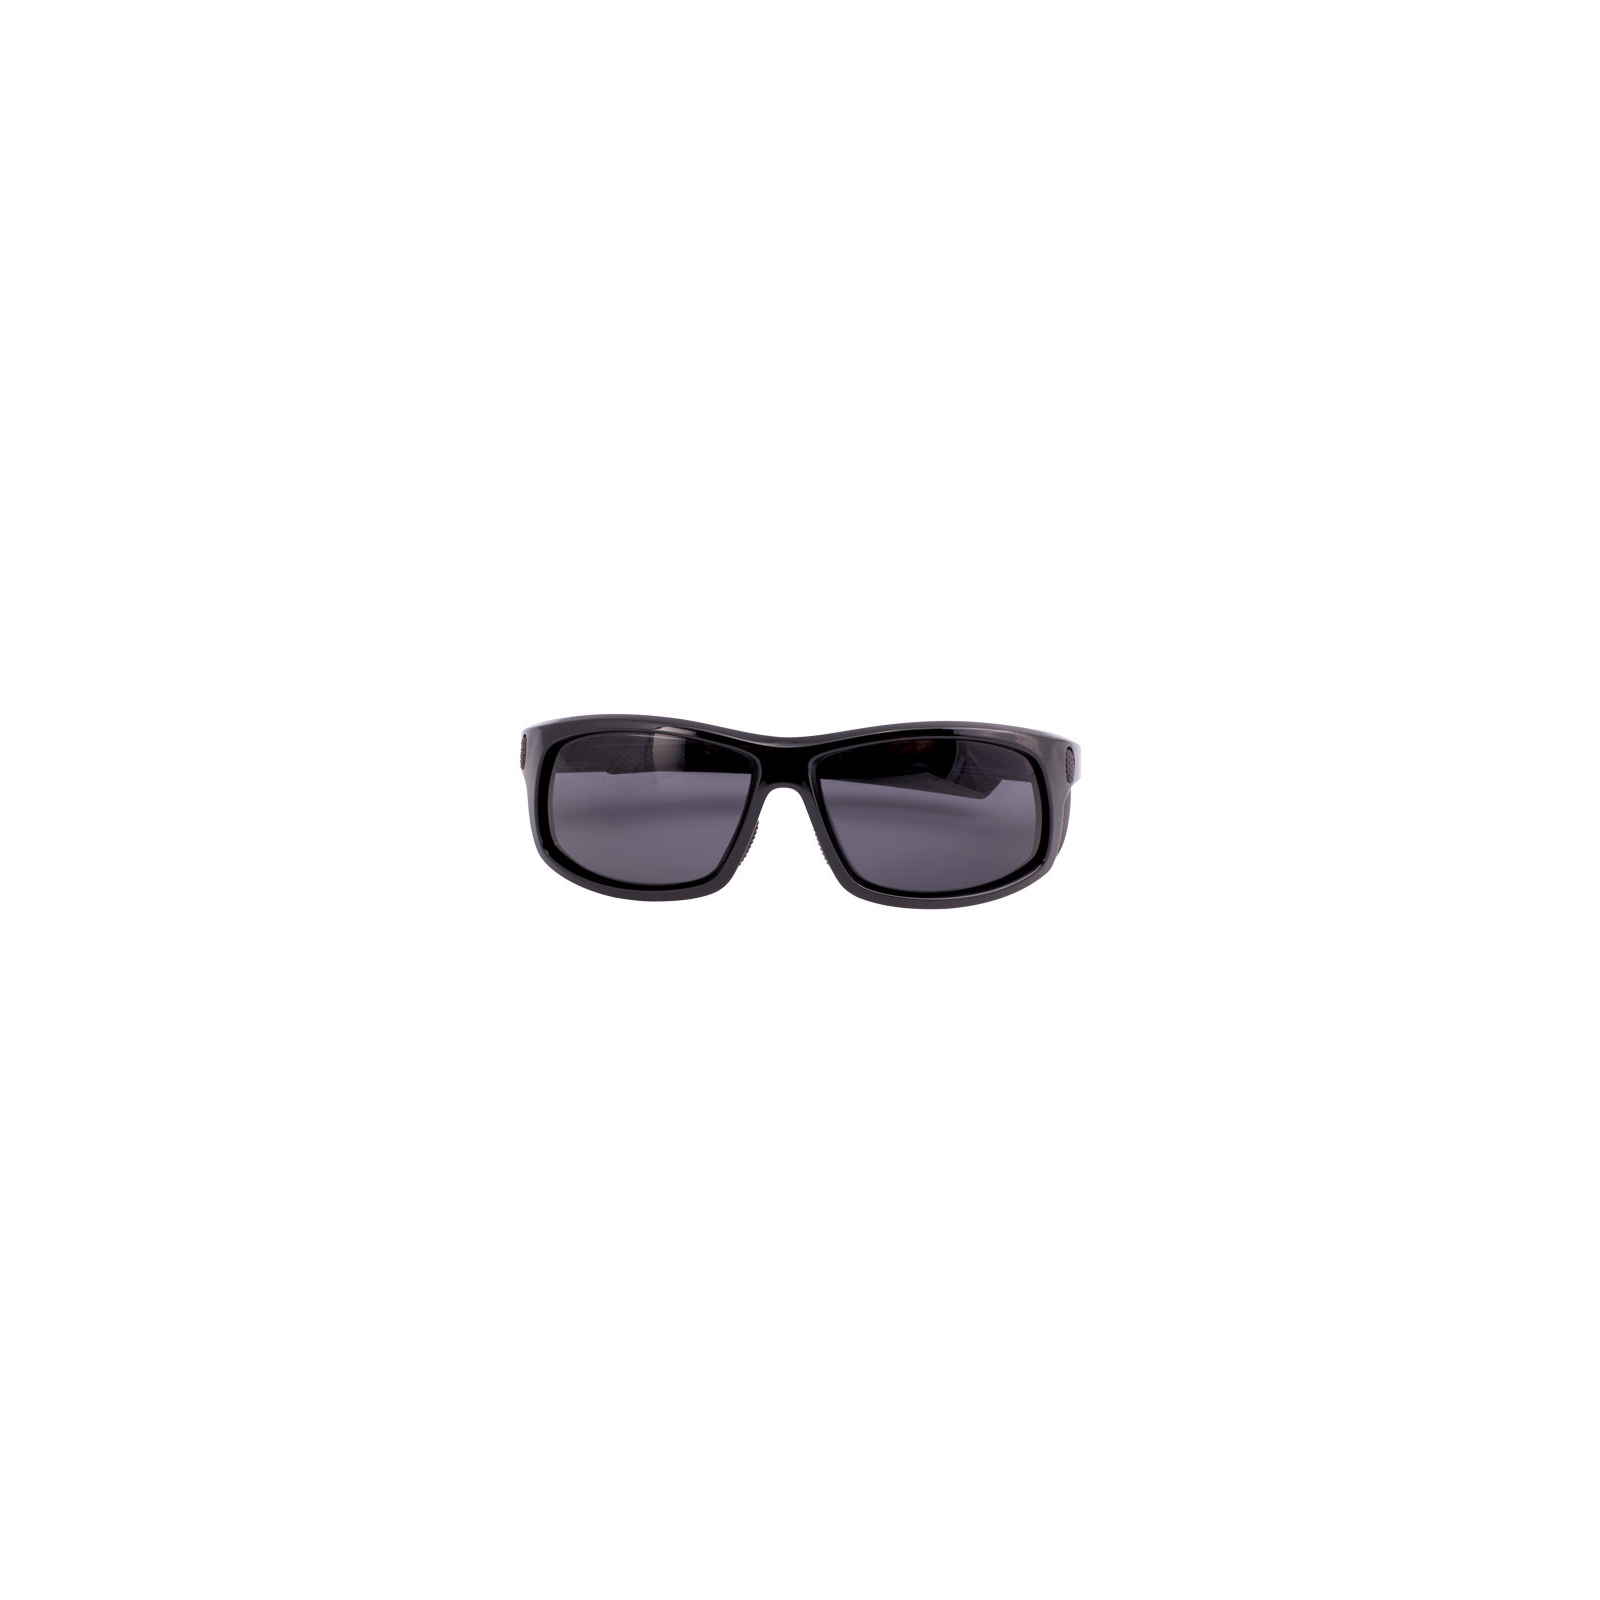 Тактические очки Cold Steel Mark-I Gloss Black (EW11) изображение 2